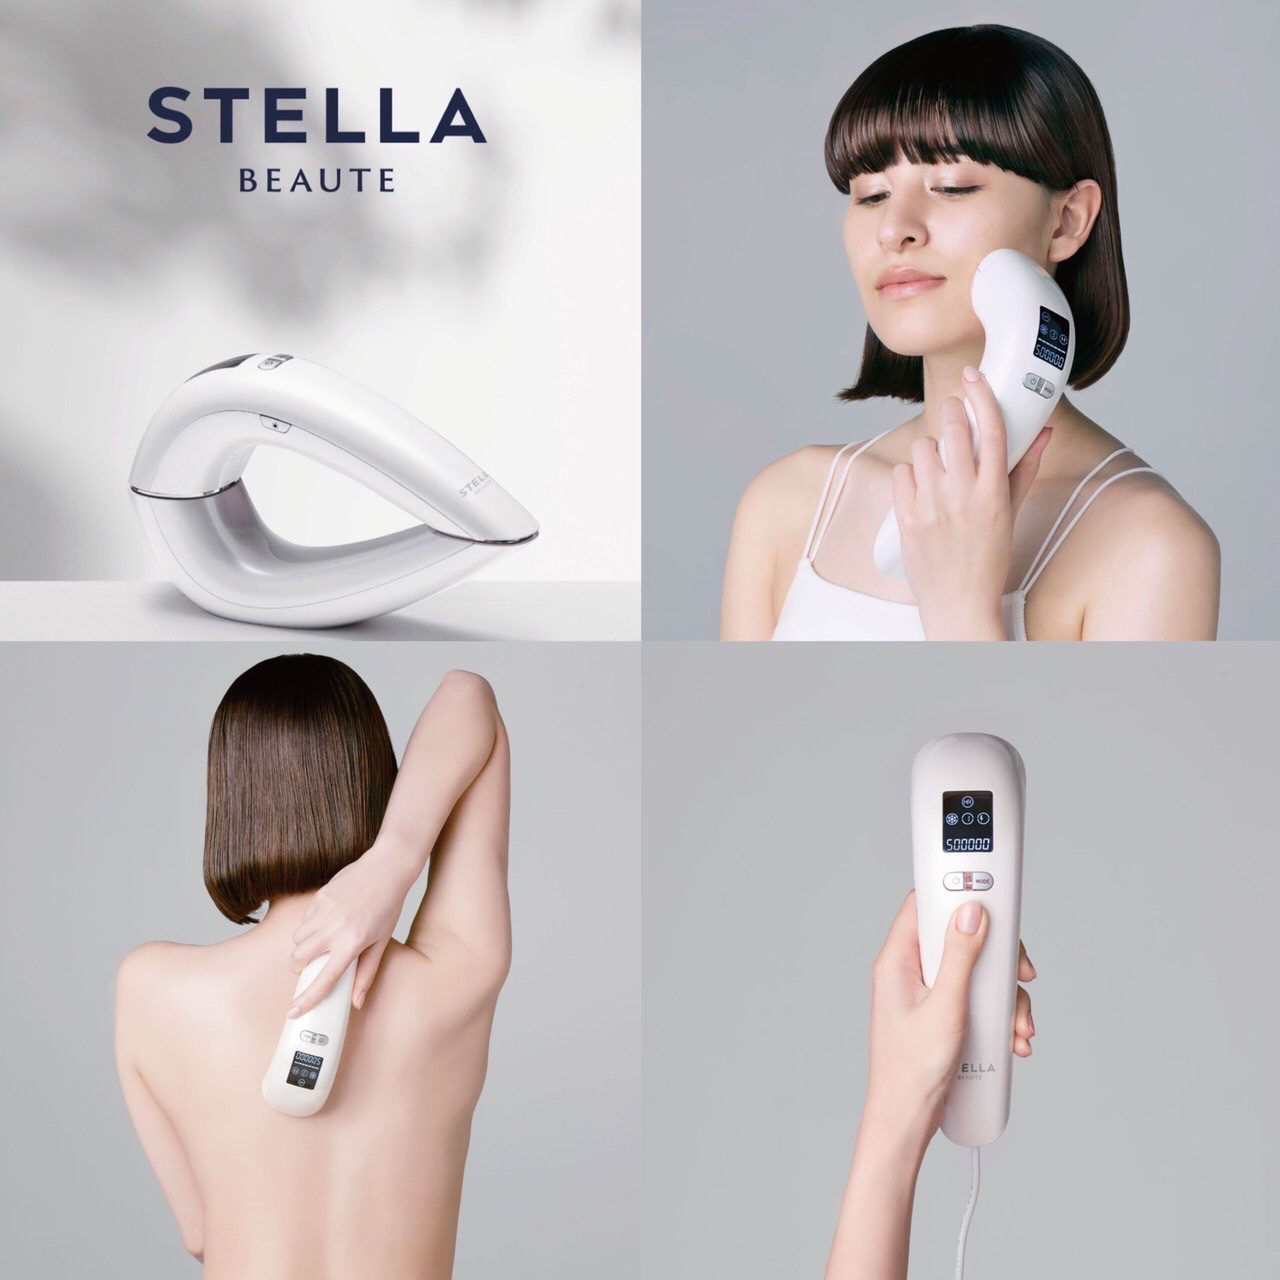 STELLA ステラ ボーテ 家庭用脱毛器 - 美容機器